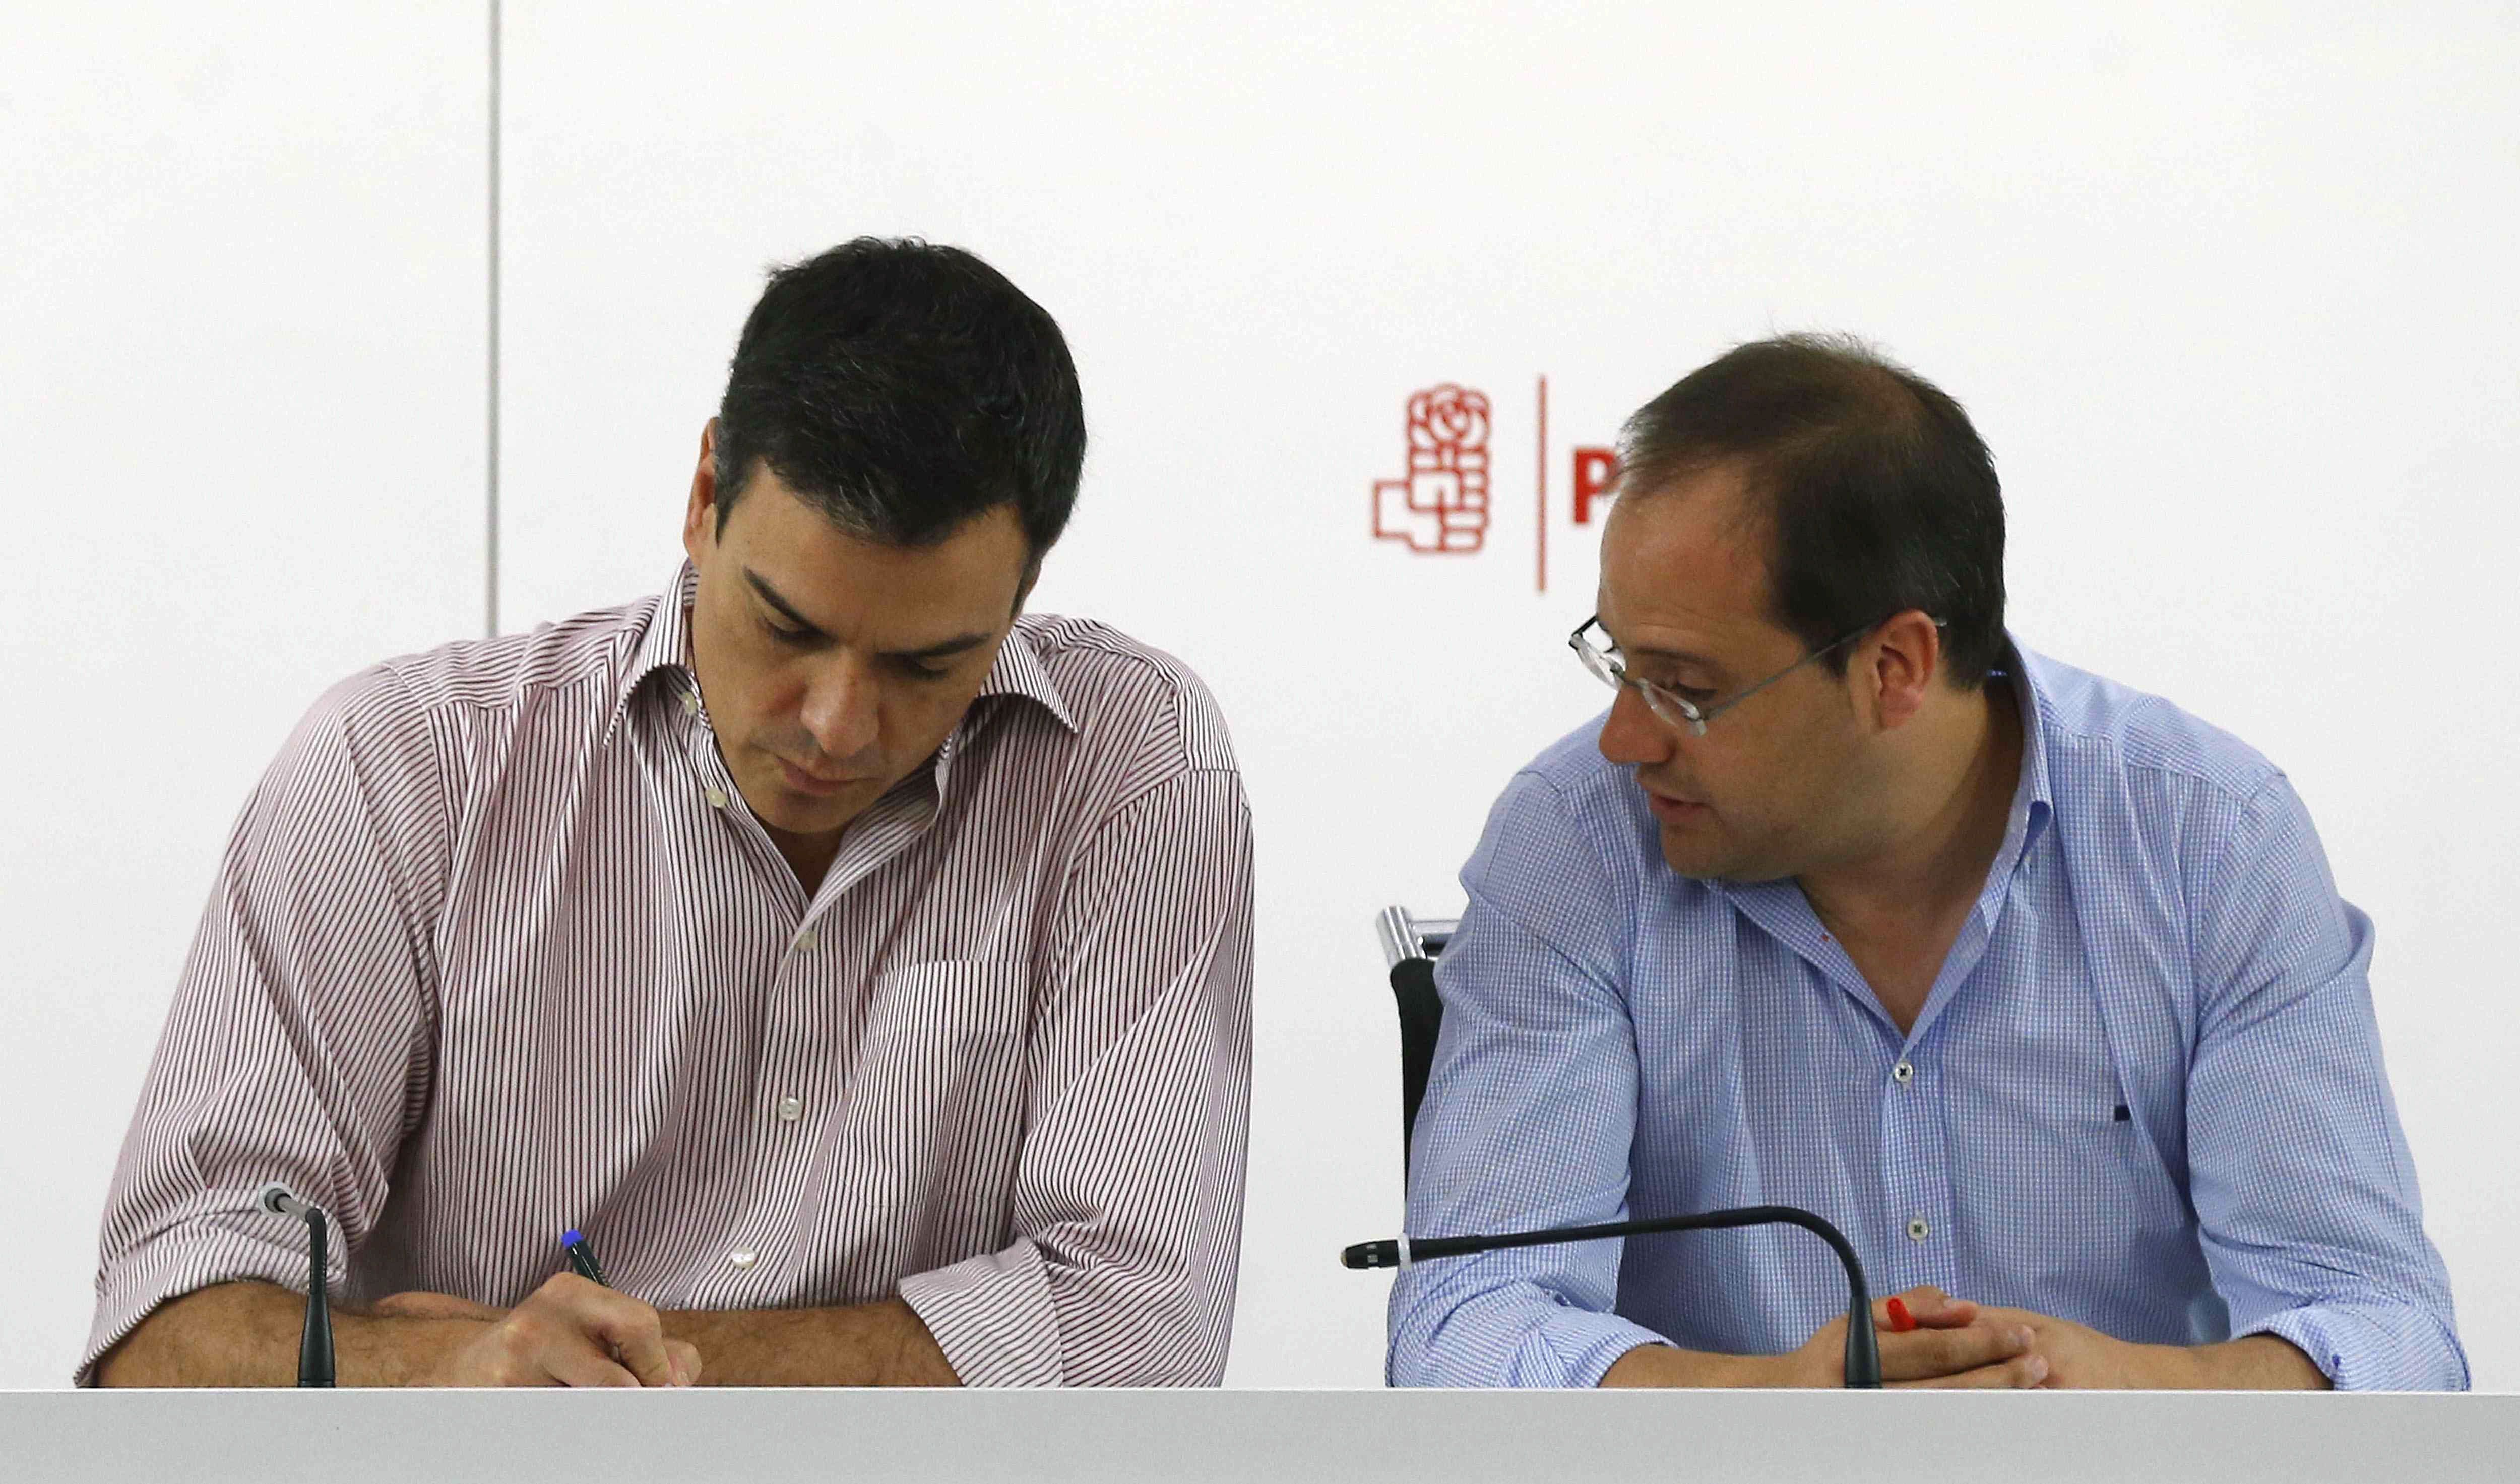 El PSOE respeta a González pero insiste en el 'no' a Rajoy